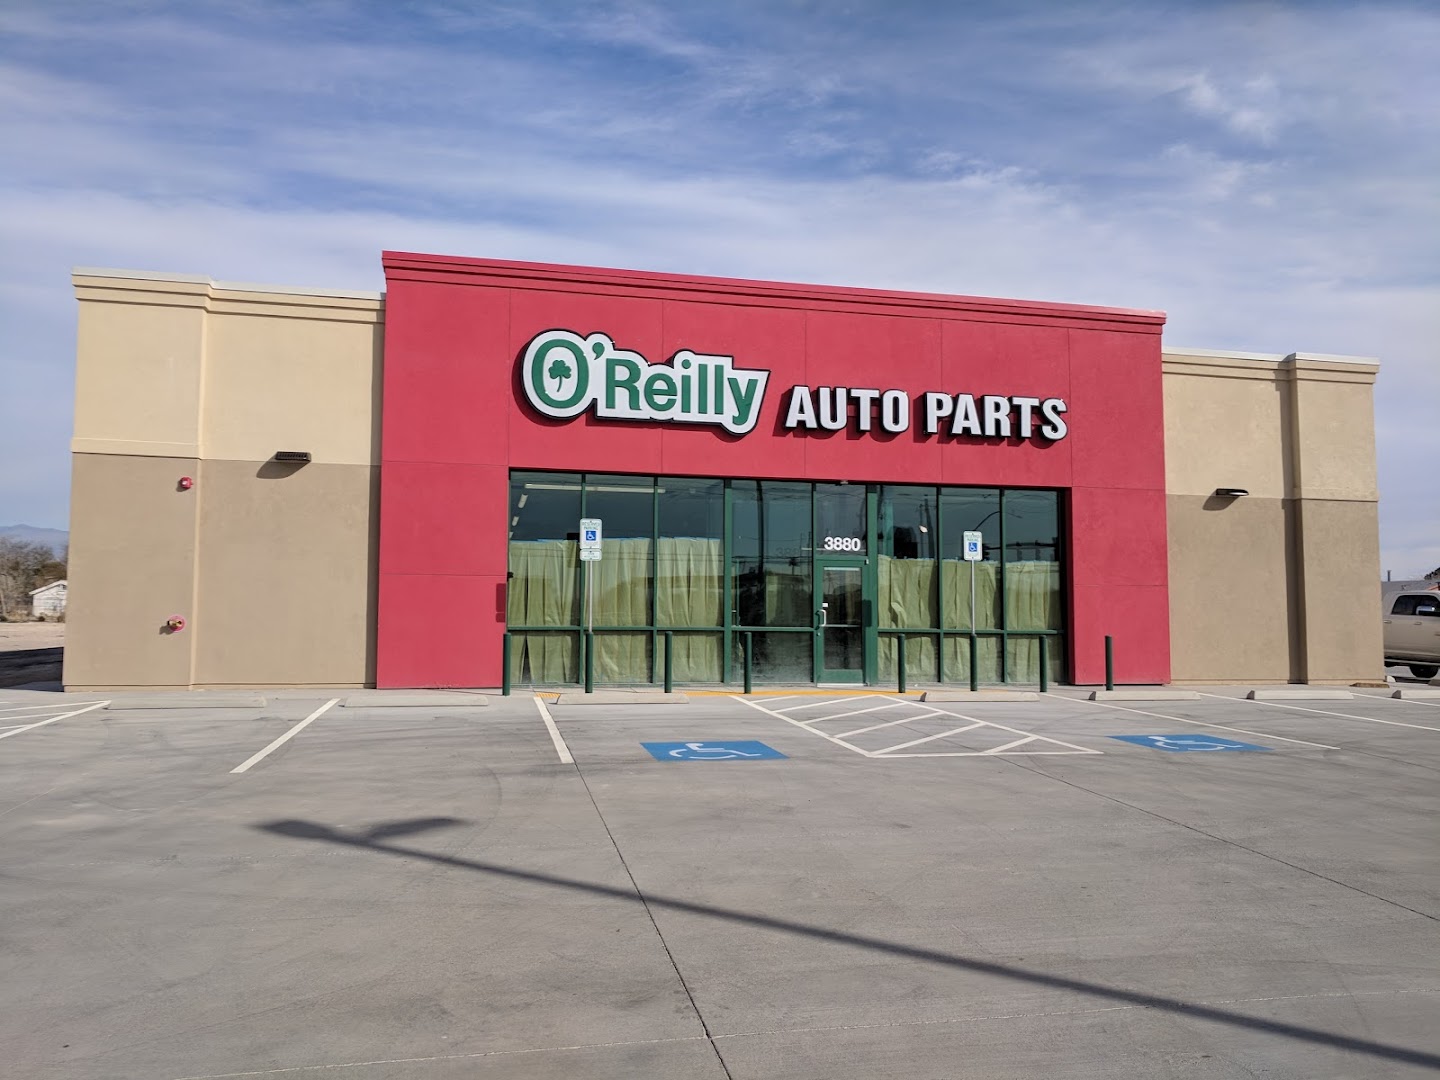 Auto parts store In Las Vegas NV 